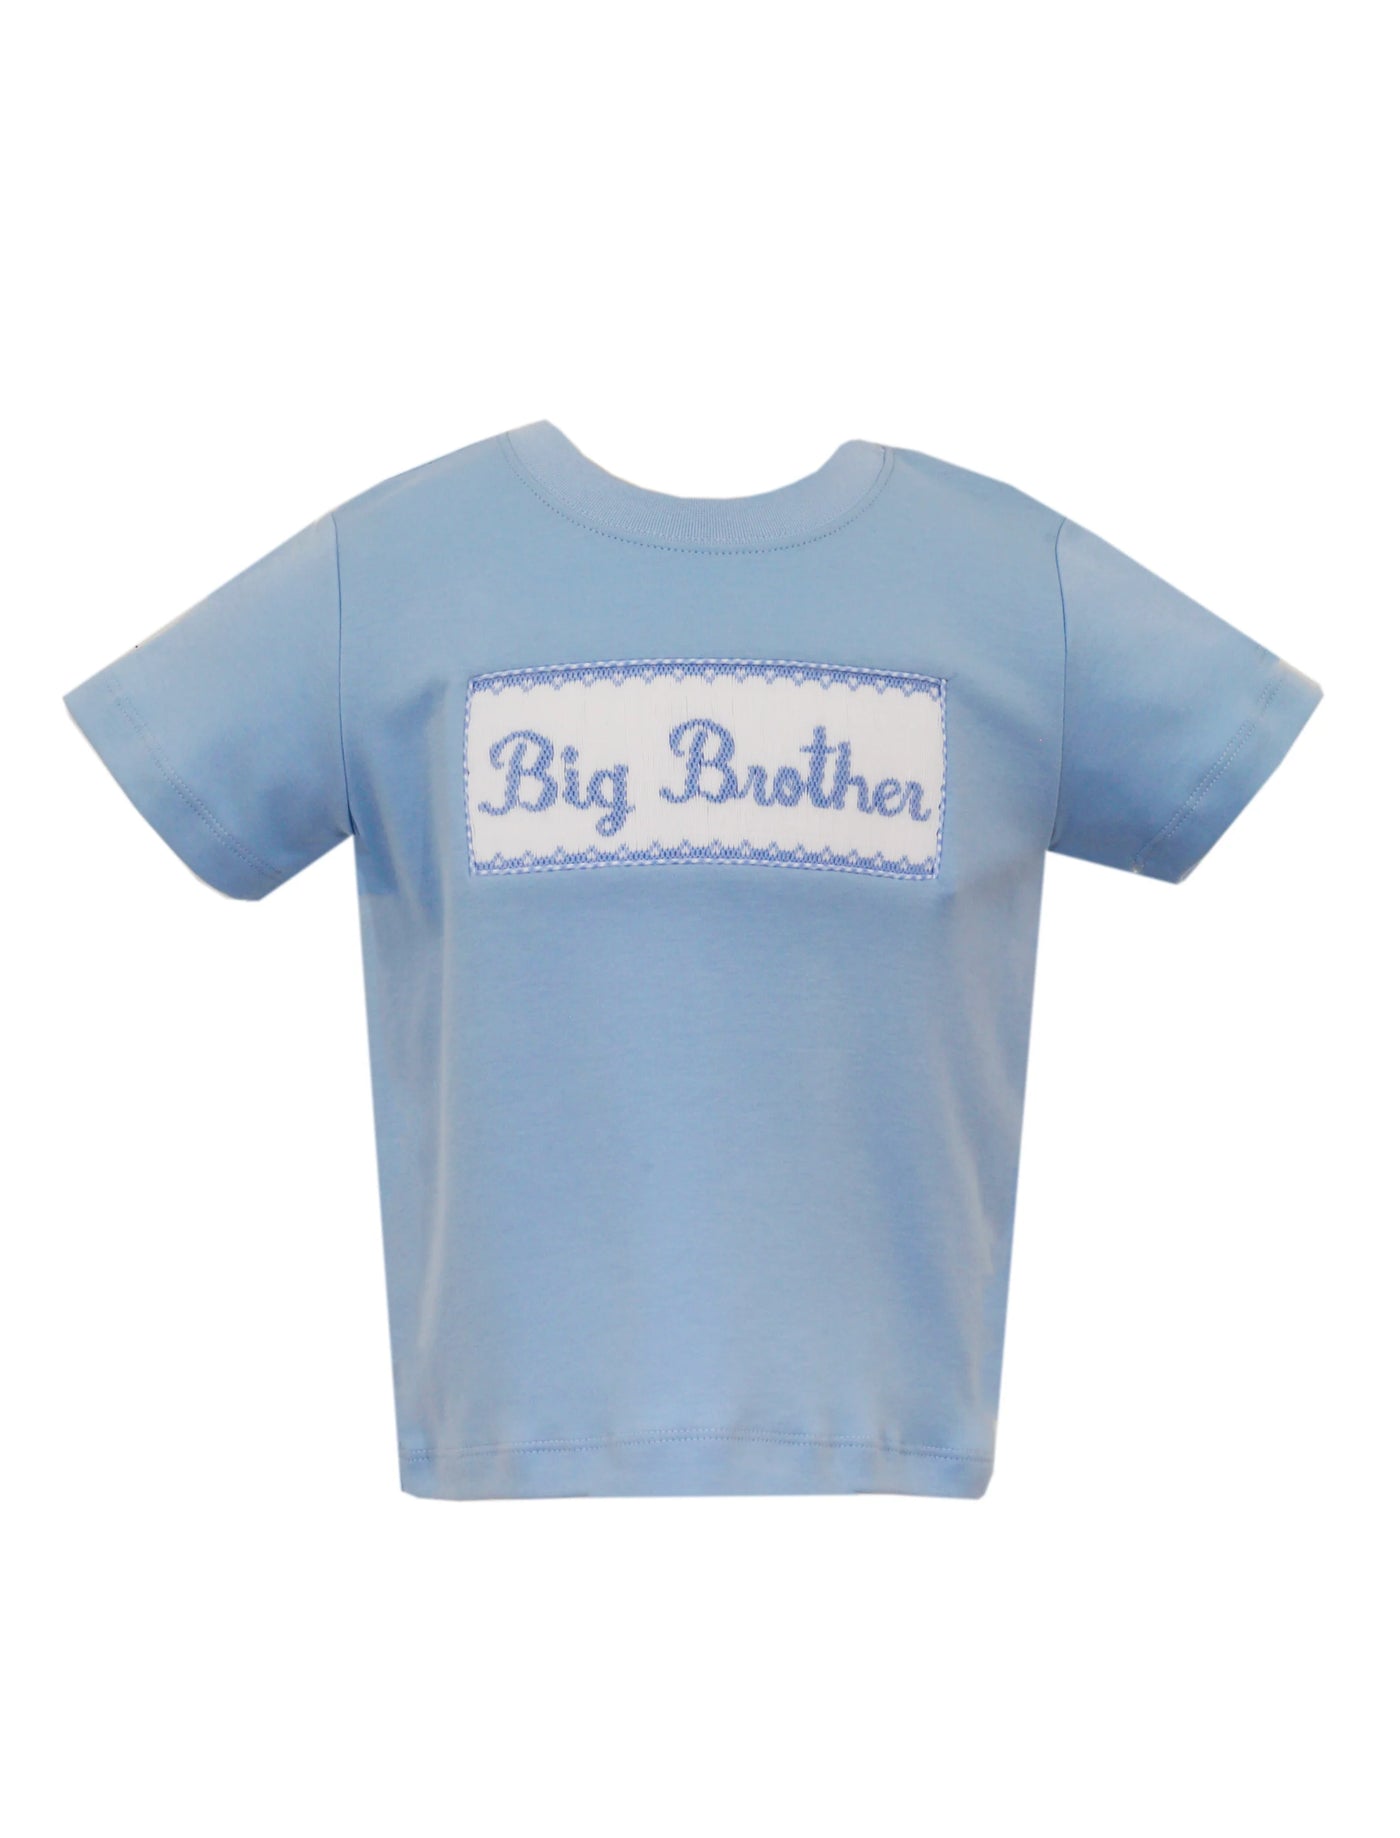 Big Brother - Light Blue Knit T-shirt - Breckenridge Baby